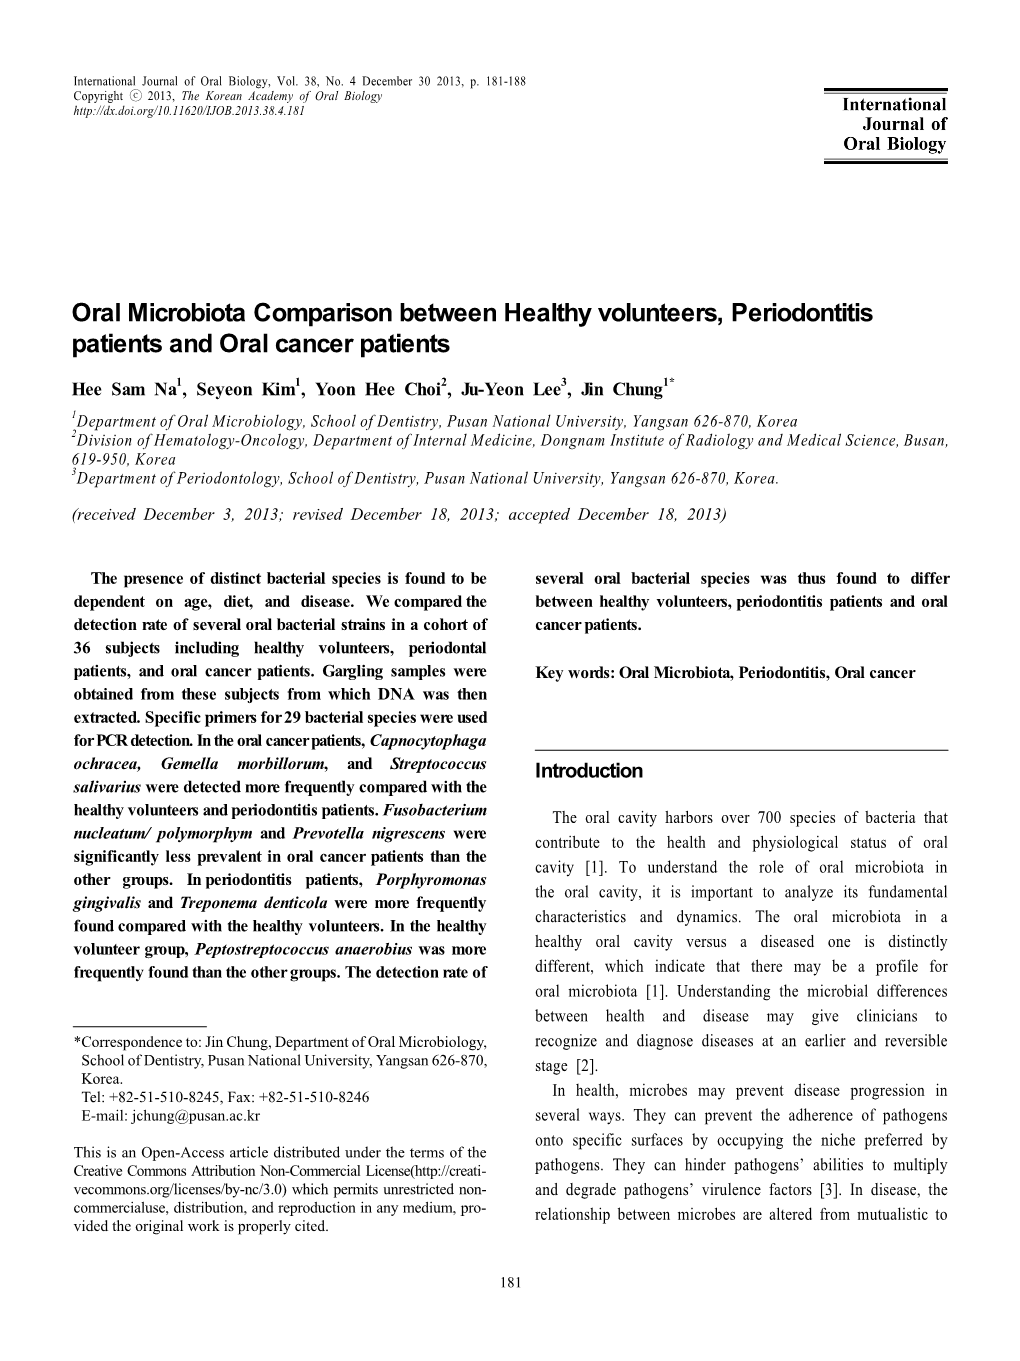 Oral Microbiota Comparison Between Healthy Volunteers, Periodontitis Patients and Oral Cancer Patients